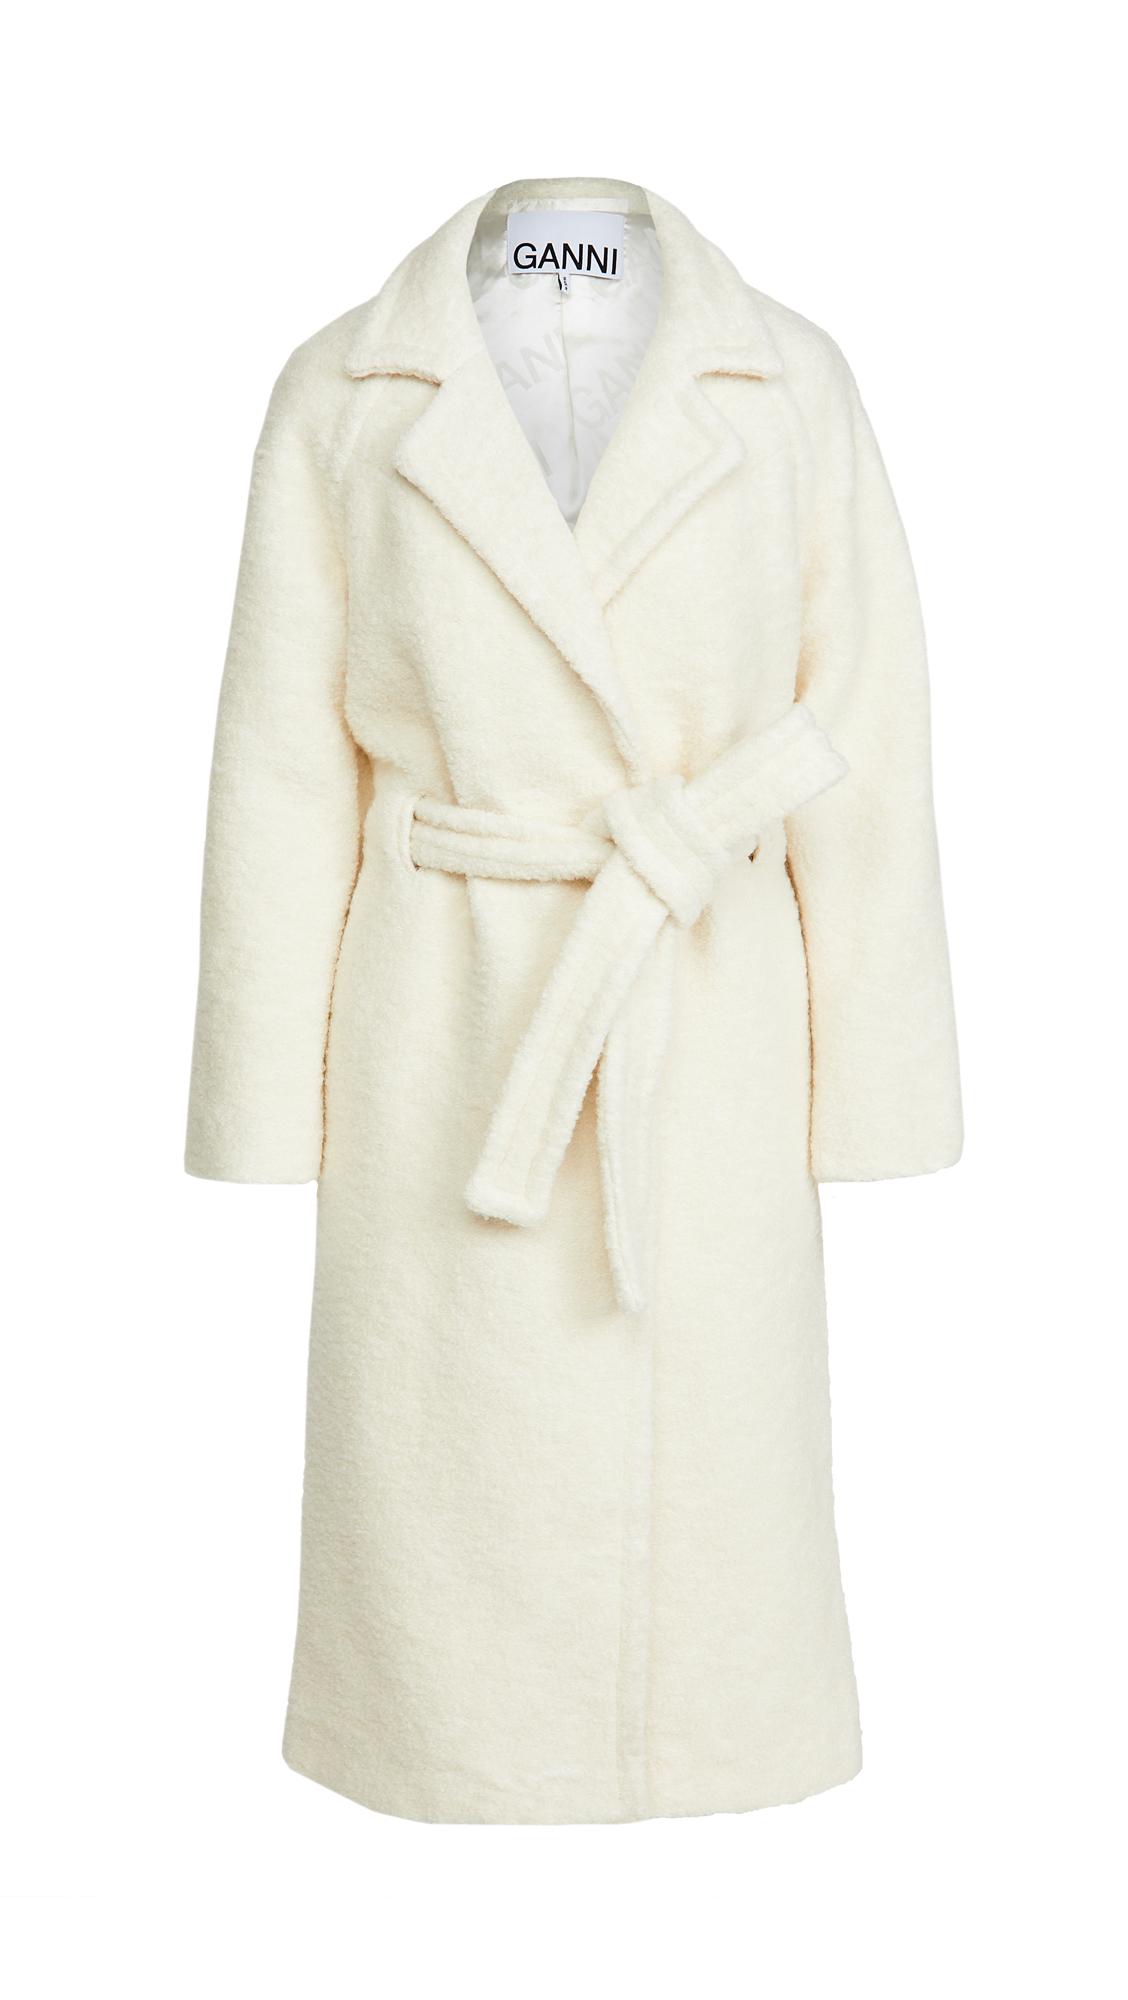 Ganni Boucle Wool Coat in White - Lyst